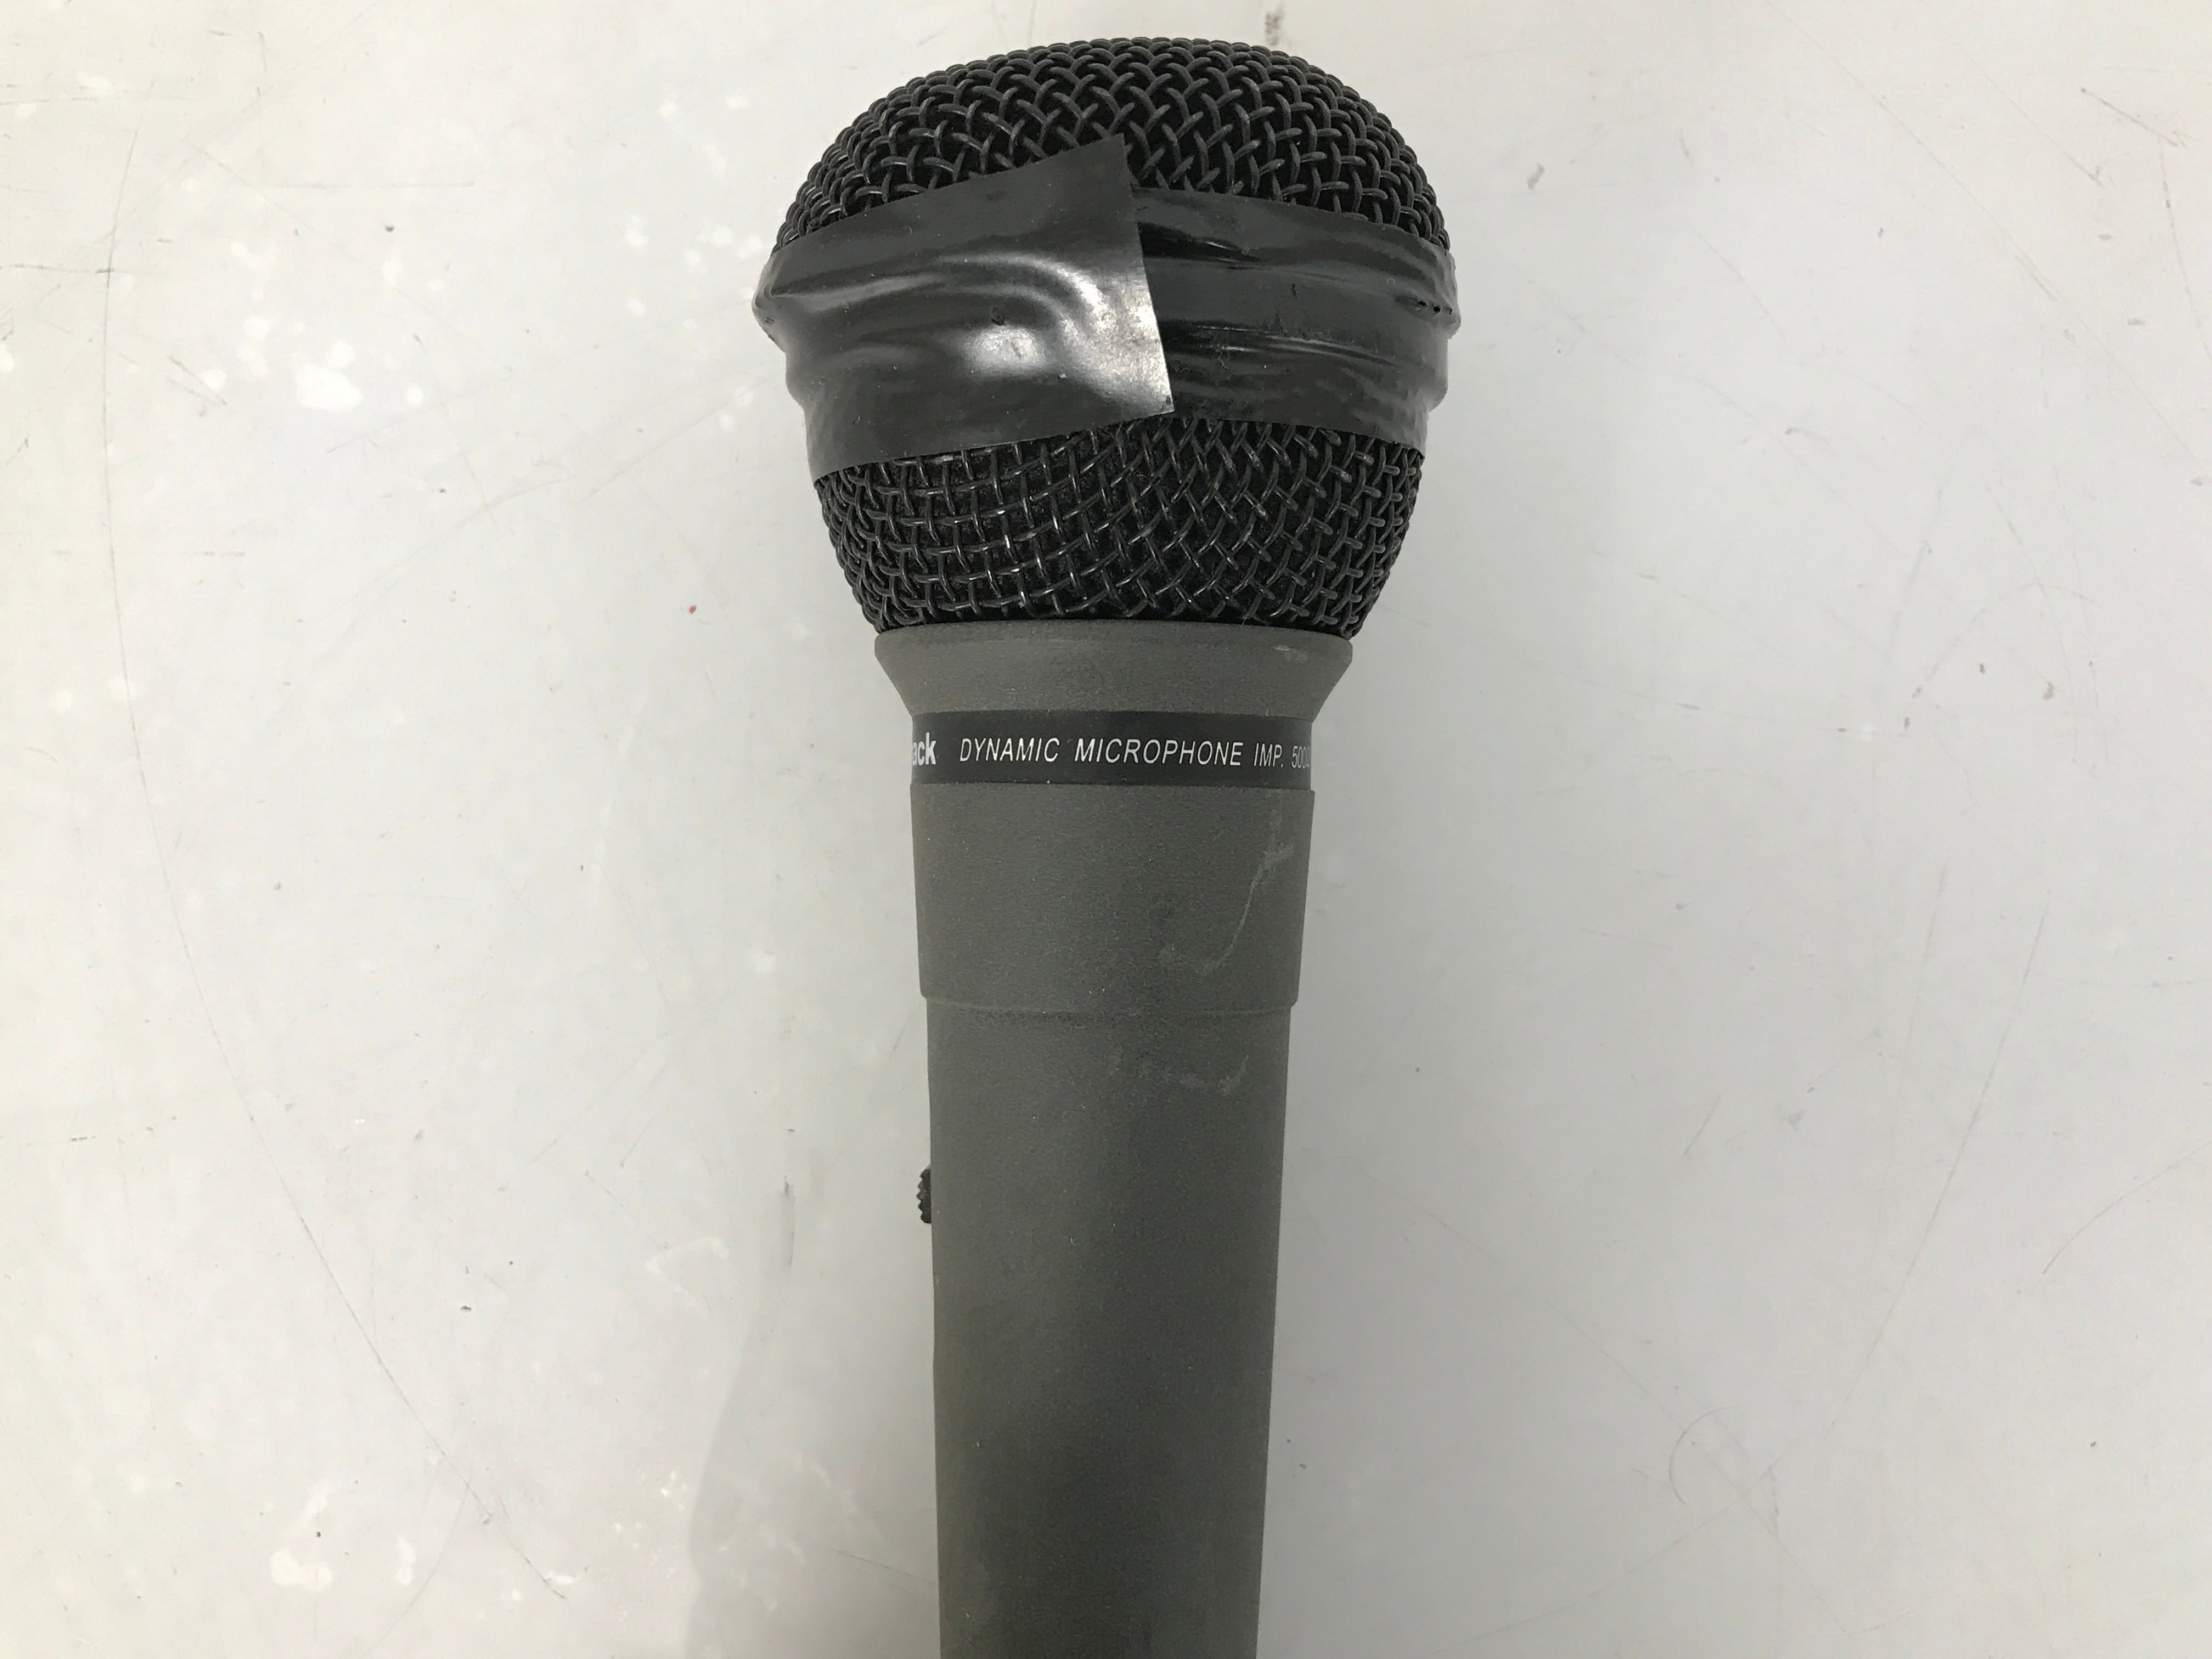 RadioShack 33-3018 Unidirectional Dynamic Microphone